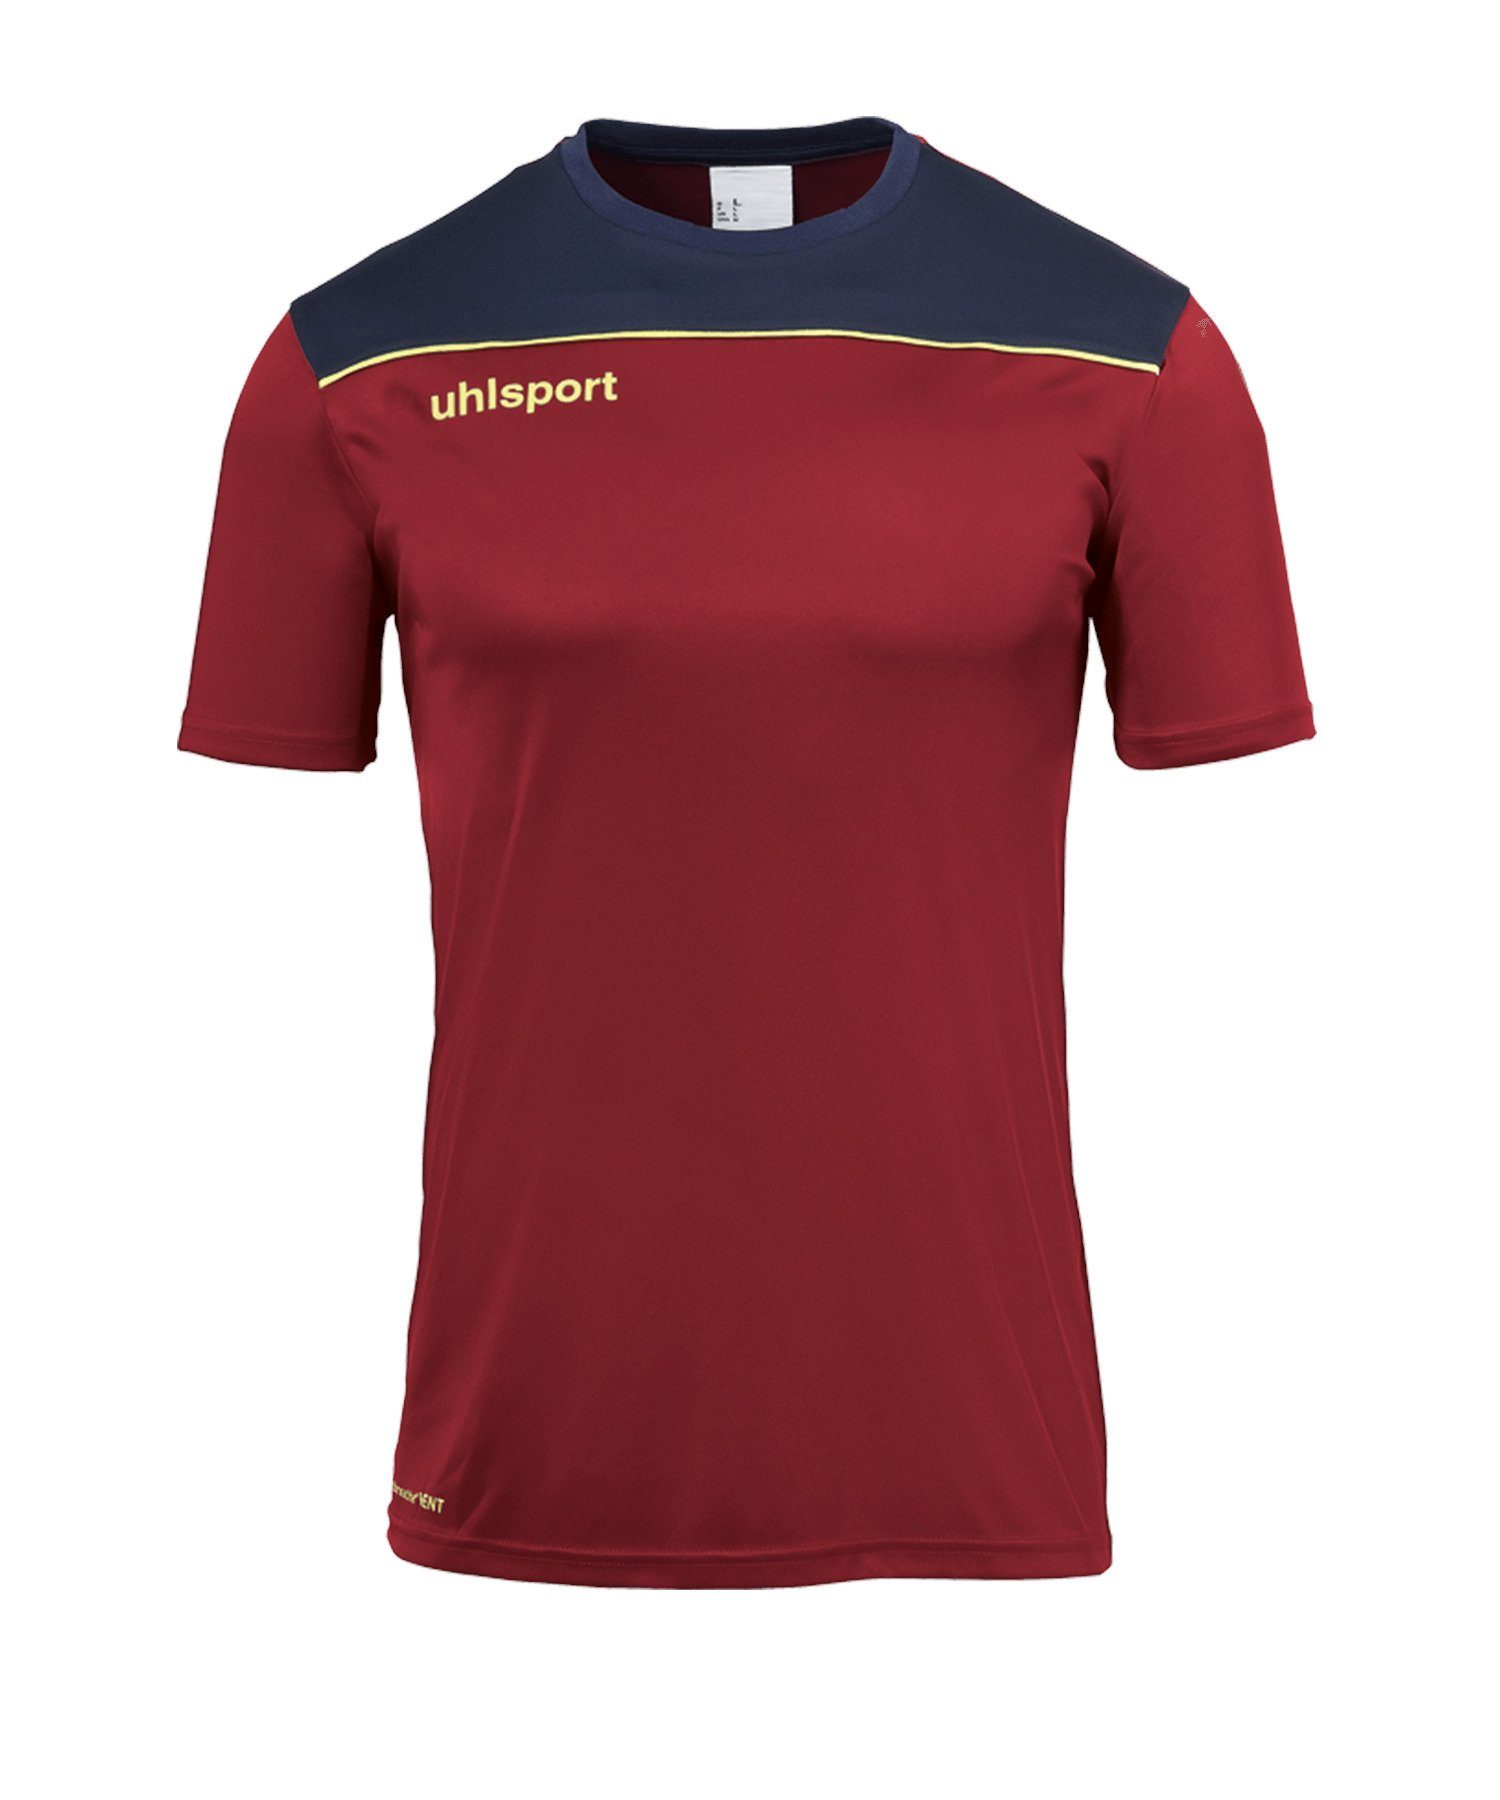 Offense default 23 uhlsport rotblaugelb Trainingsshirt T-Shirt